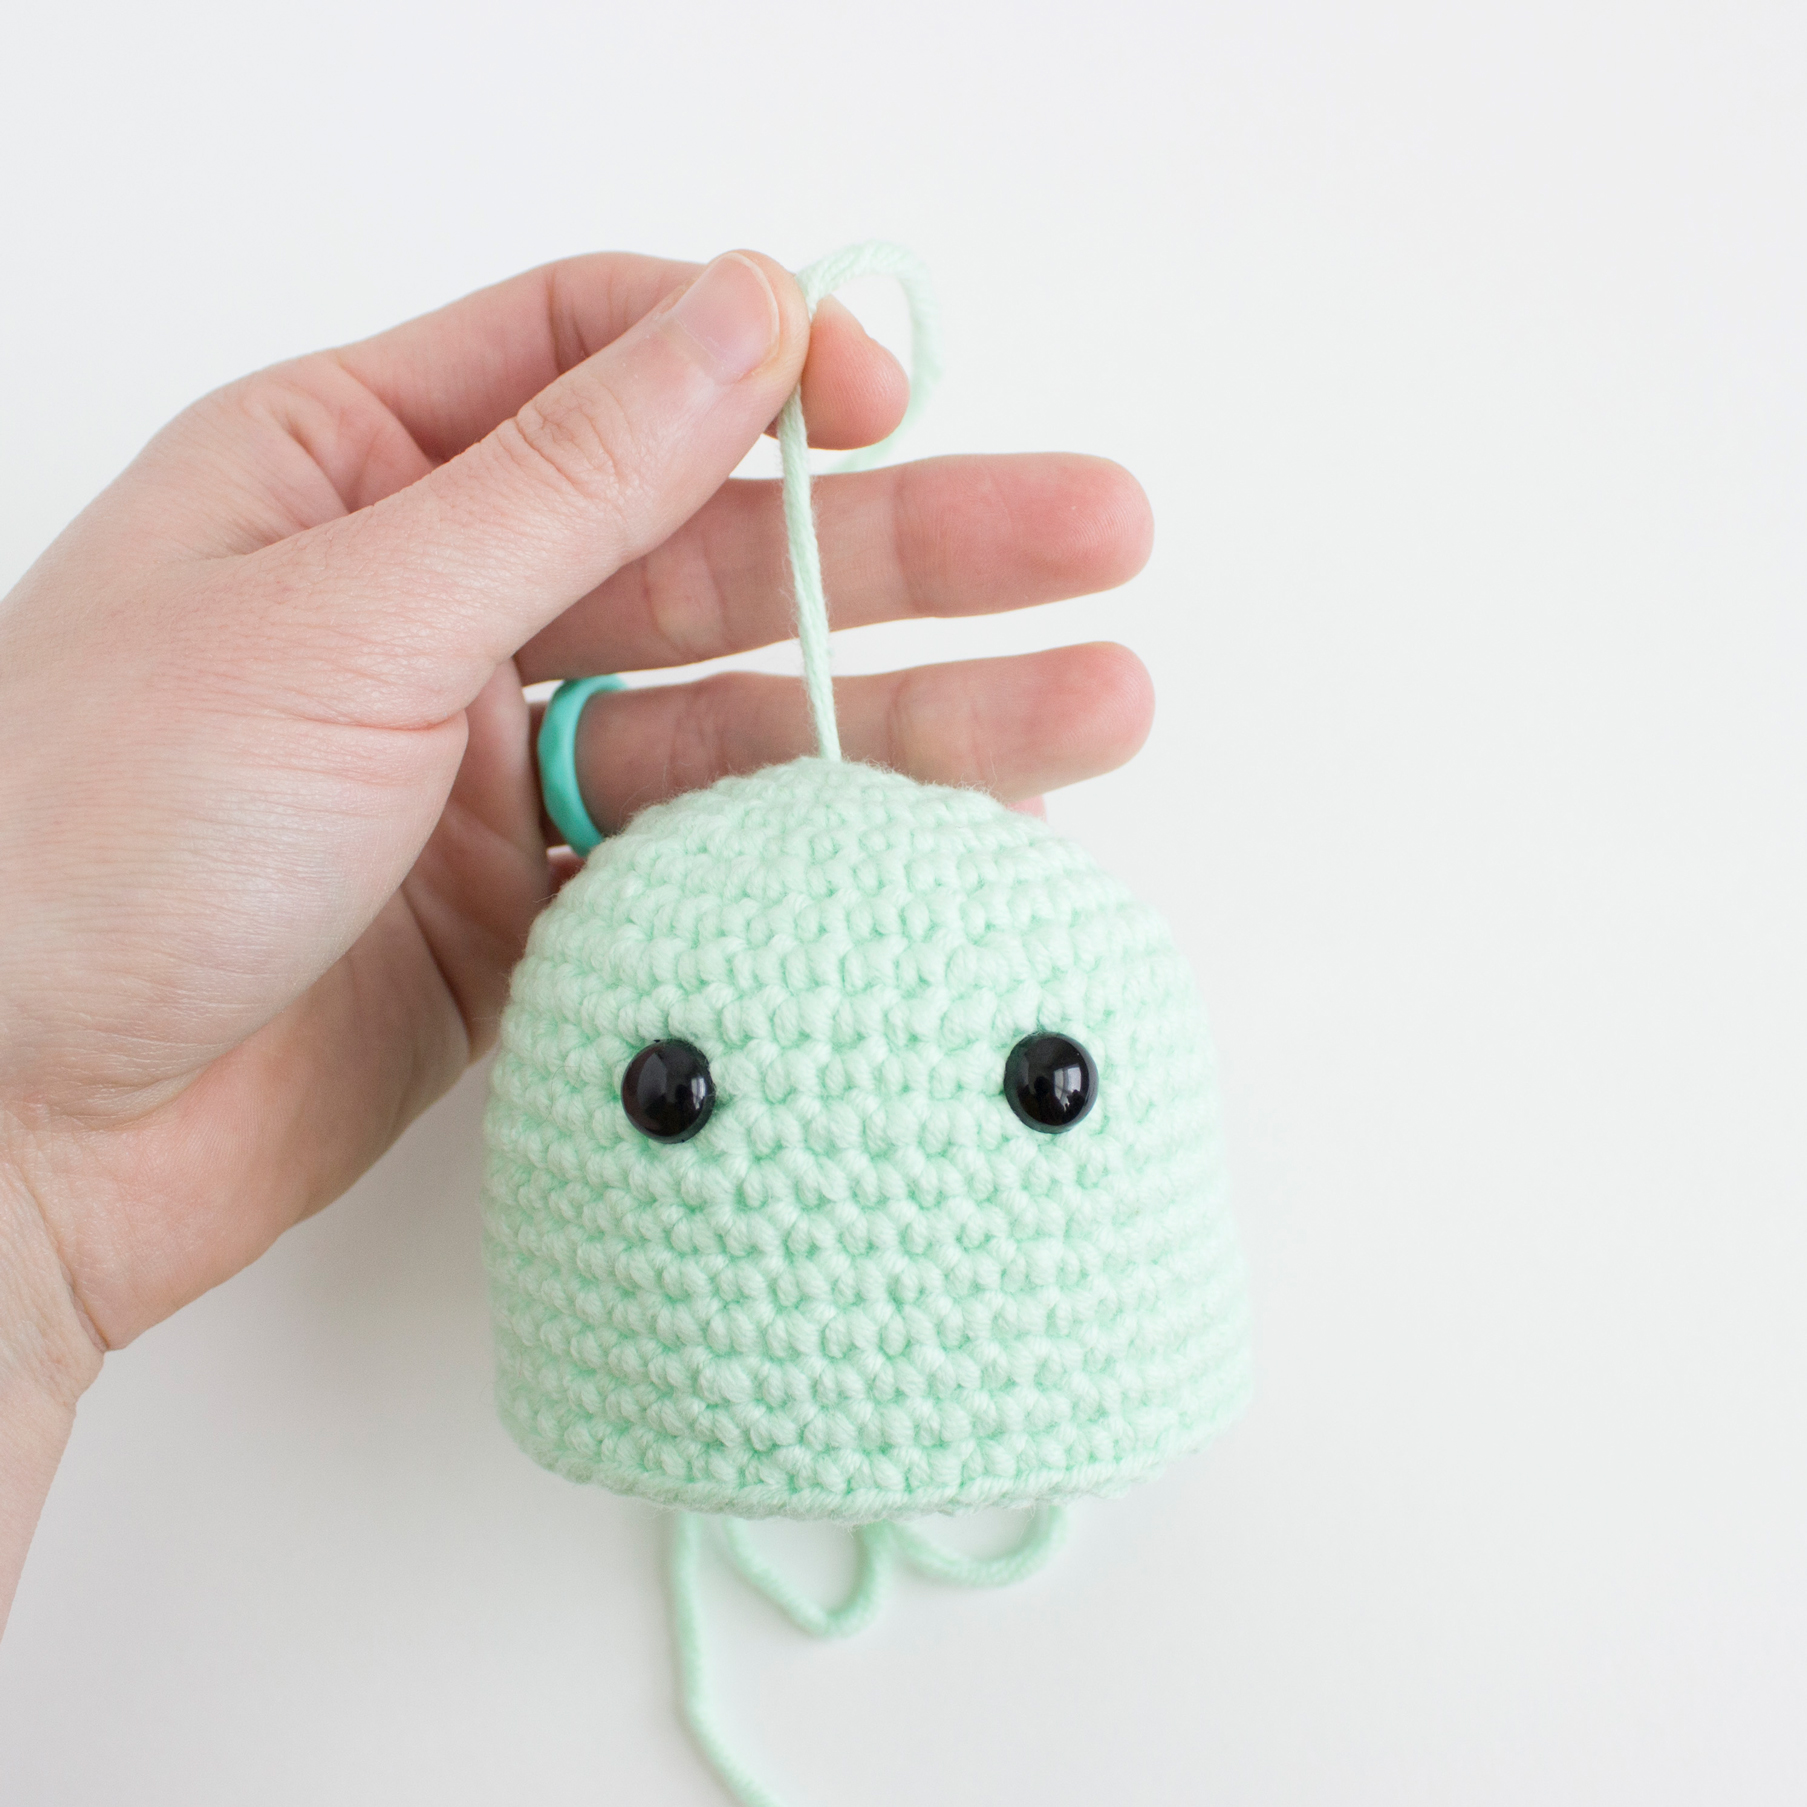 Crochet Pattern: Spring Chicks, PDF Amigurumi Pattern – A